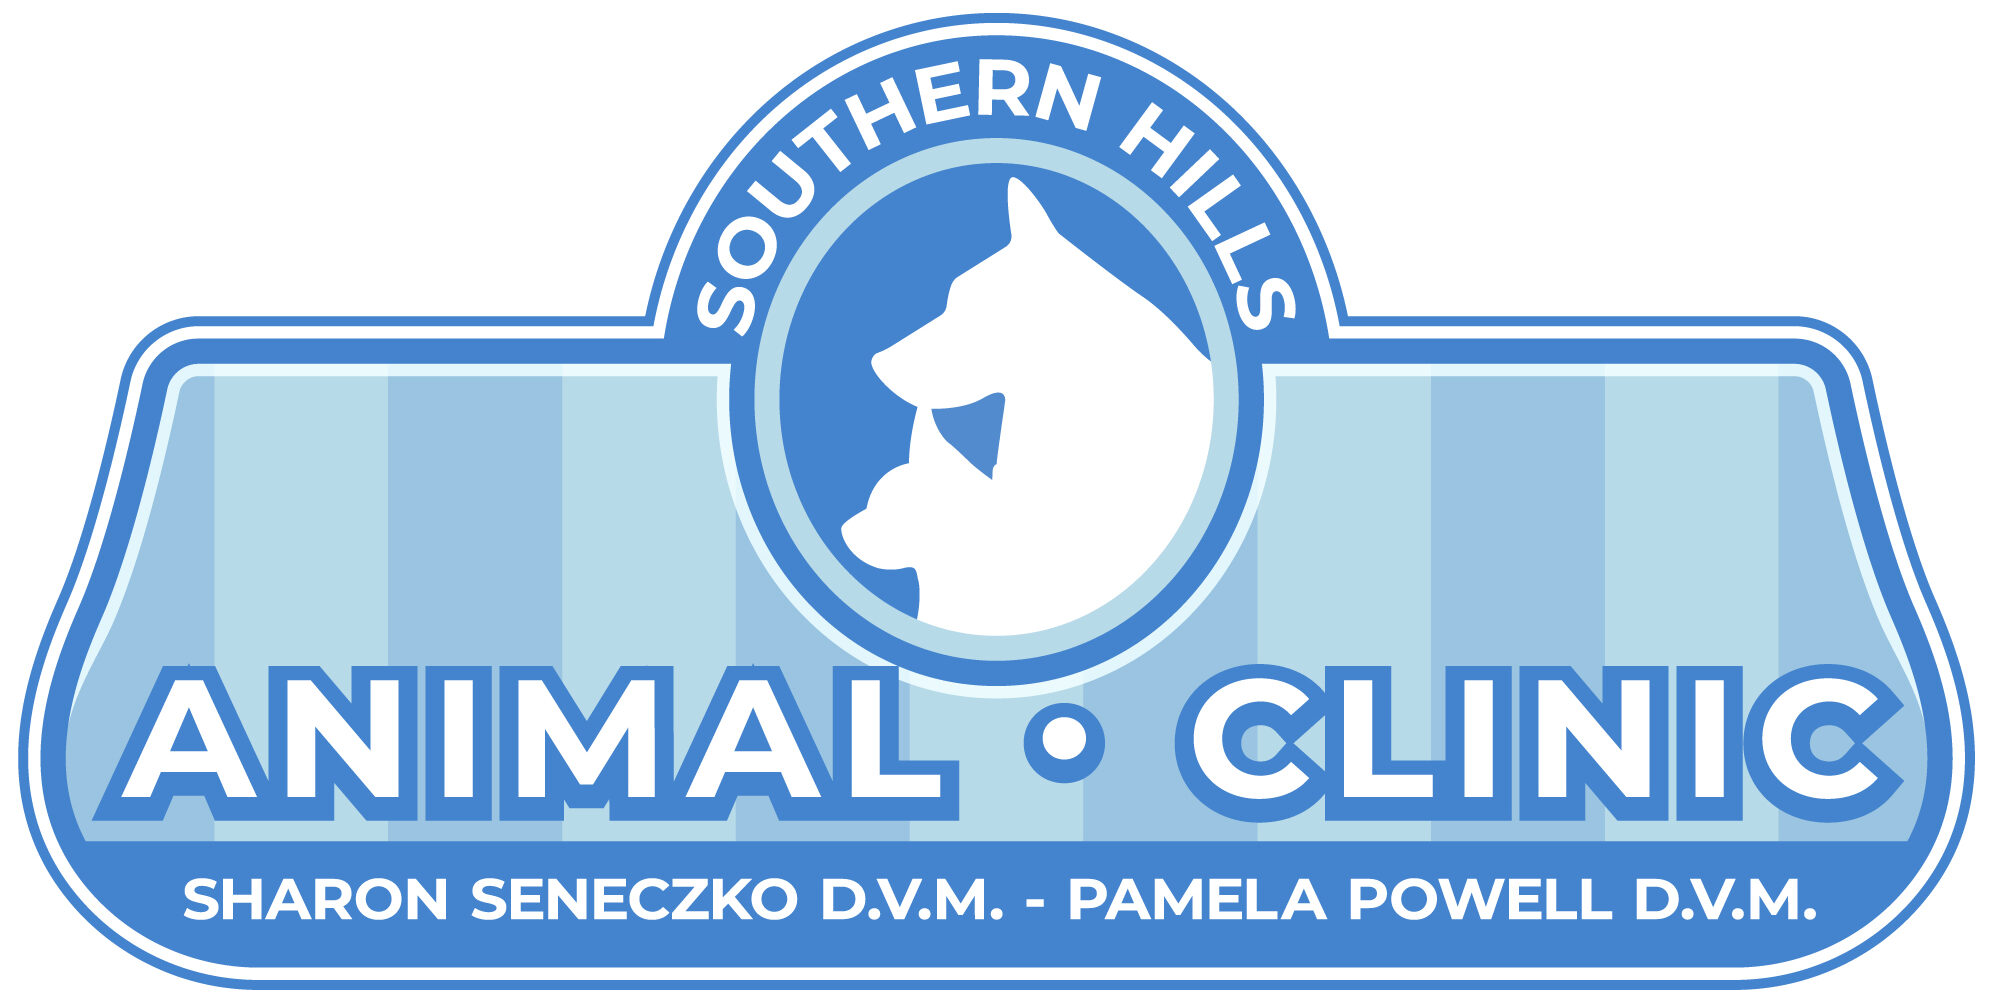 Southern Hills Animal Clinic logo